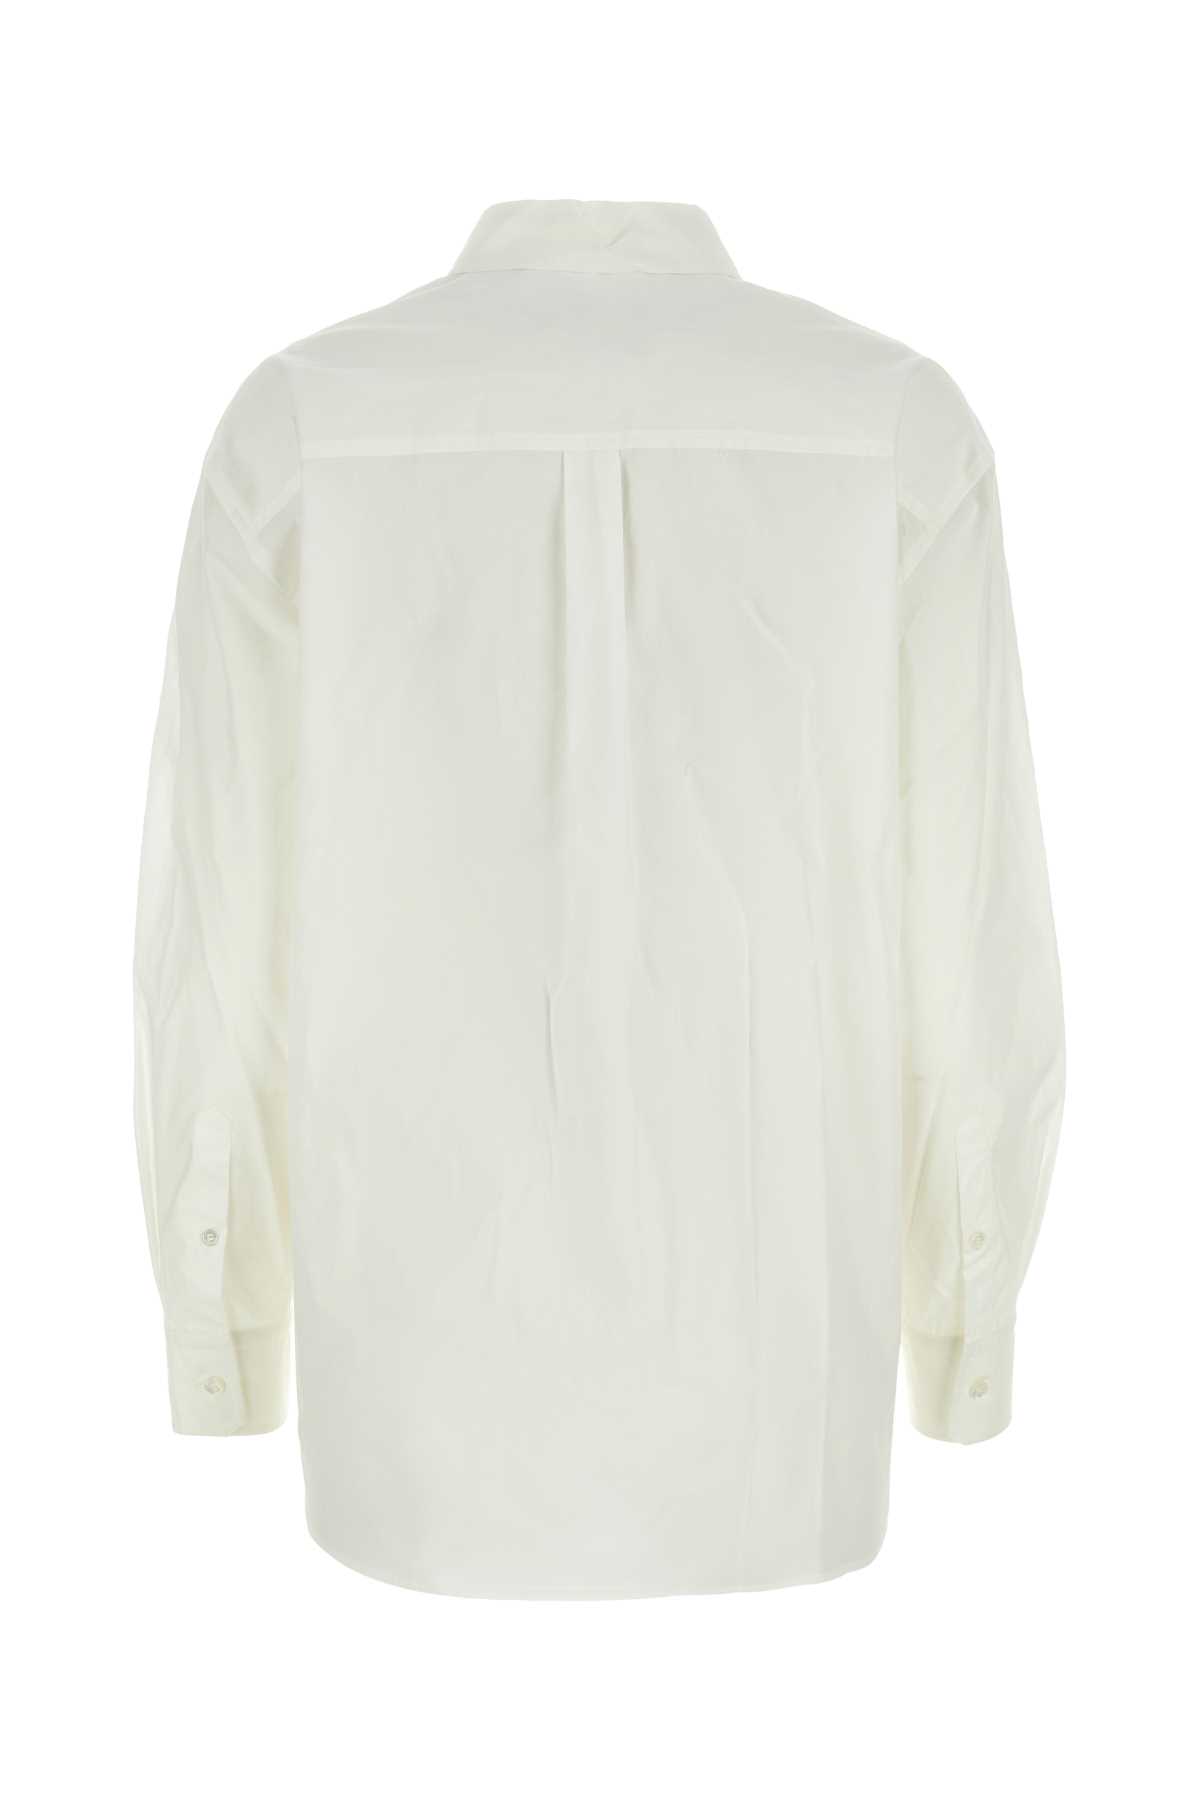 Weekend Max Mara White Cotton Shirt In 001